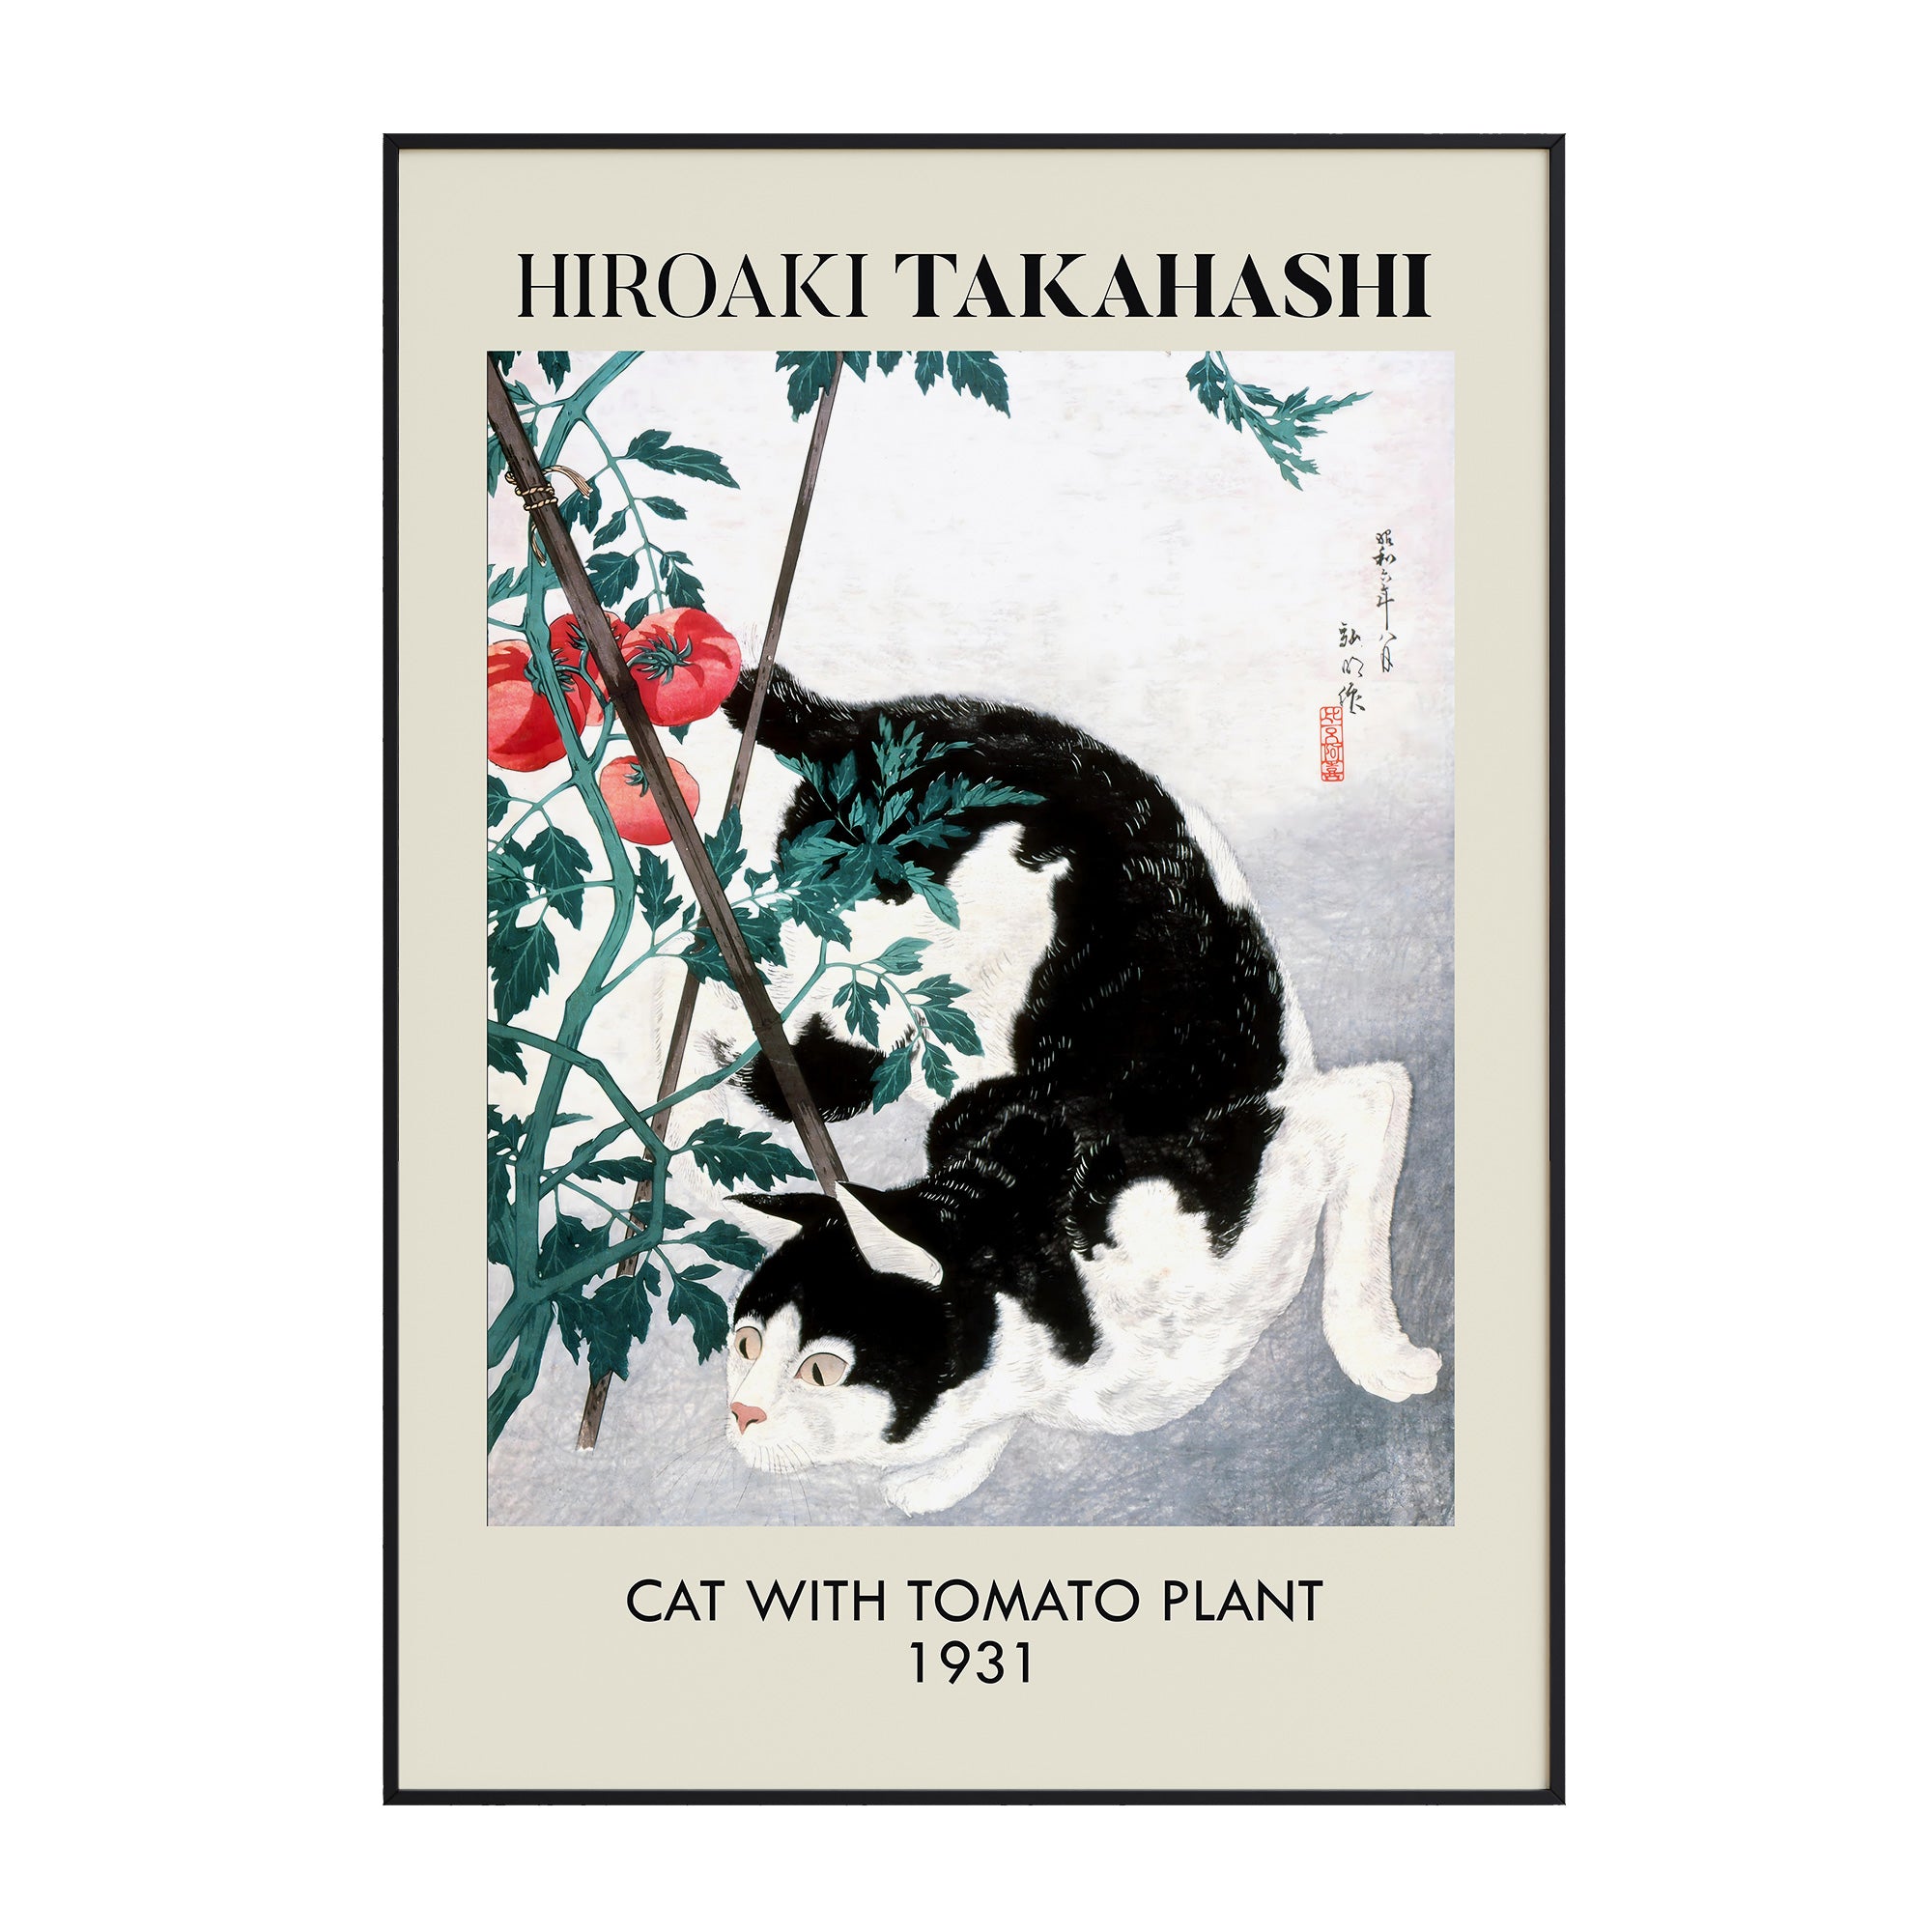 Hiroaki Takahashi - Cat with Tomato Plant